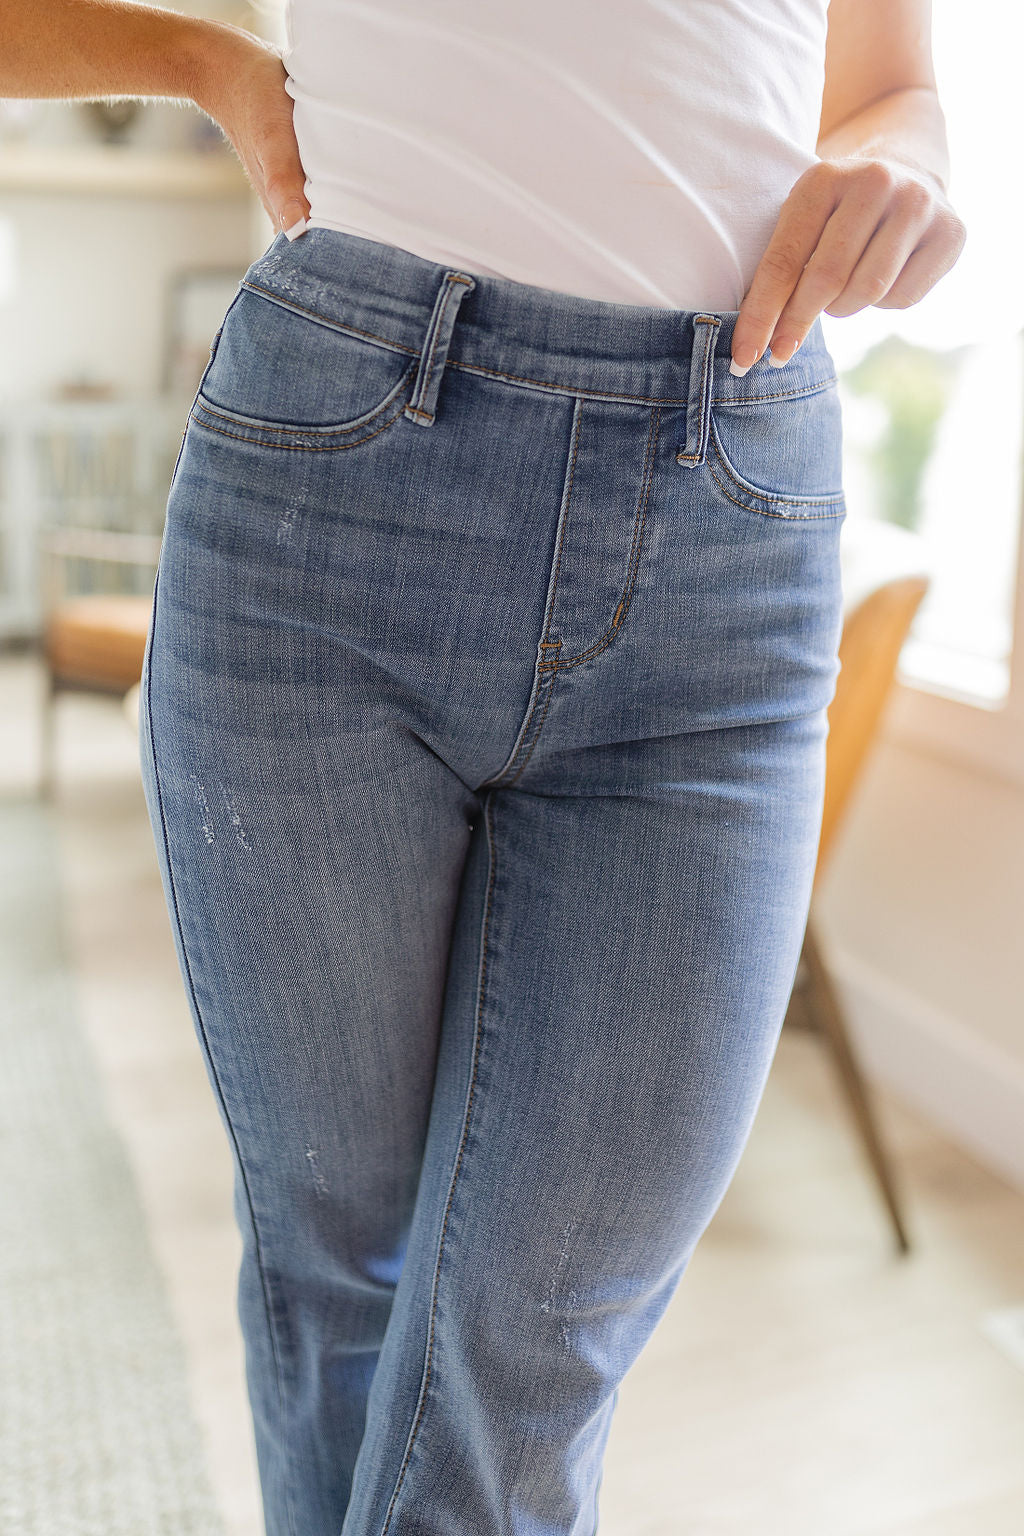 Judy Blue Paula High Rise Pull On Slim Bootcut-Jeans-Krush Kandy, Women's Online Fashion Boutique Located in Phoenix, Arizona (Scottsdale Area)